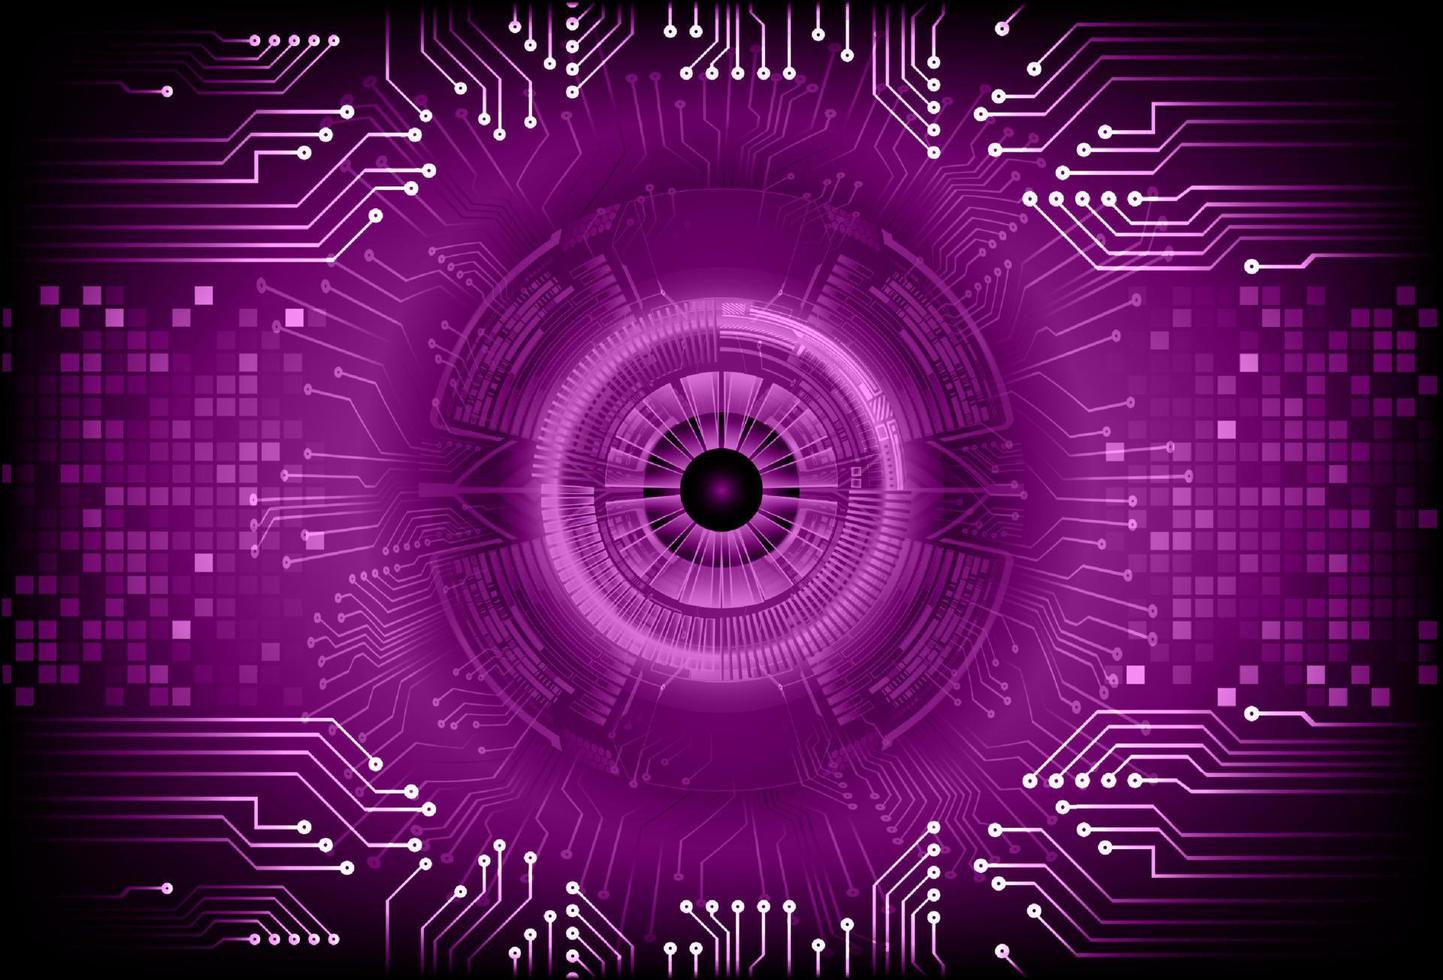 Modern  Cybersecurity Eye on Technology Background vector